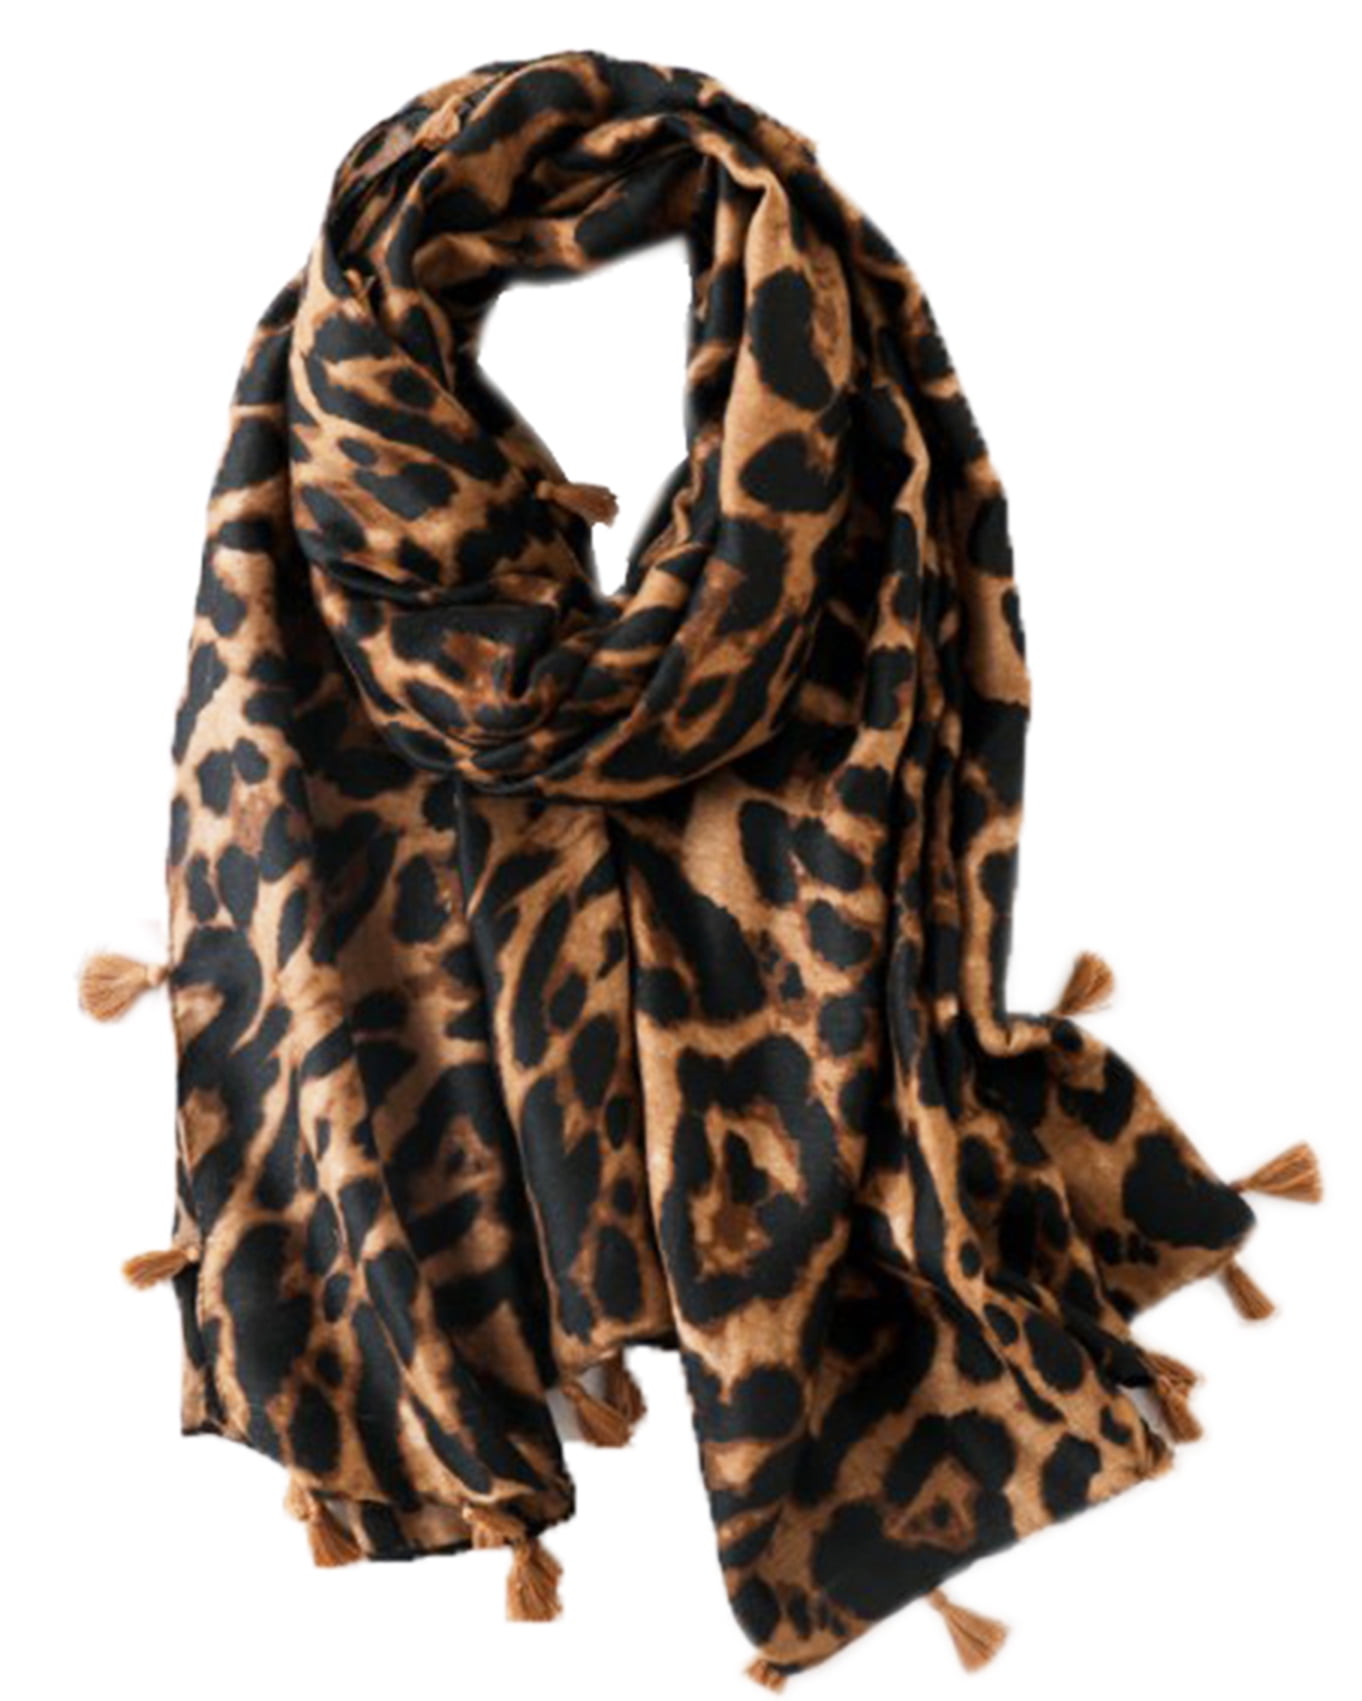 Women's Fashion Scarves Pretty Pink patter tassel shawl Cotton soft scarf 35"*71 